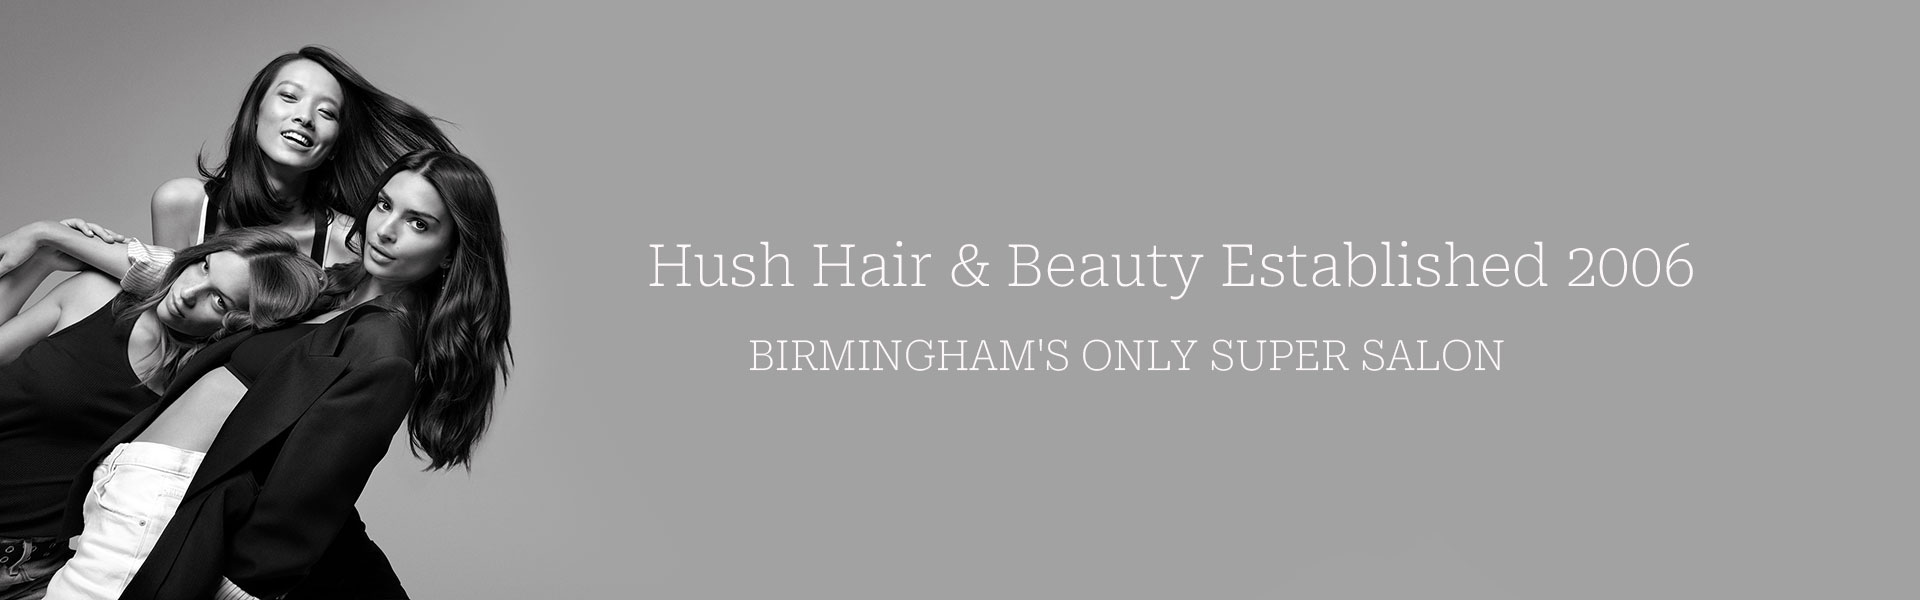 Hush Hair Beauty Established 2006 2